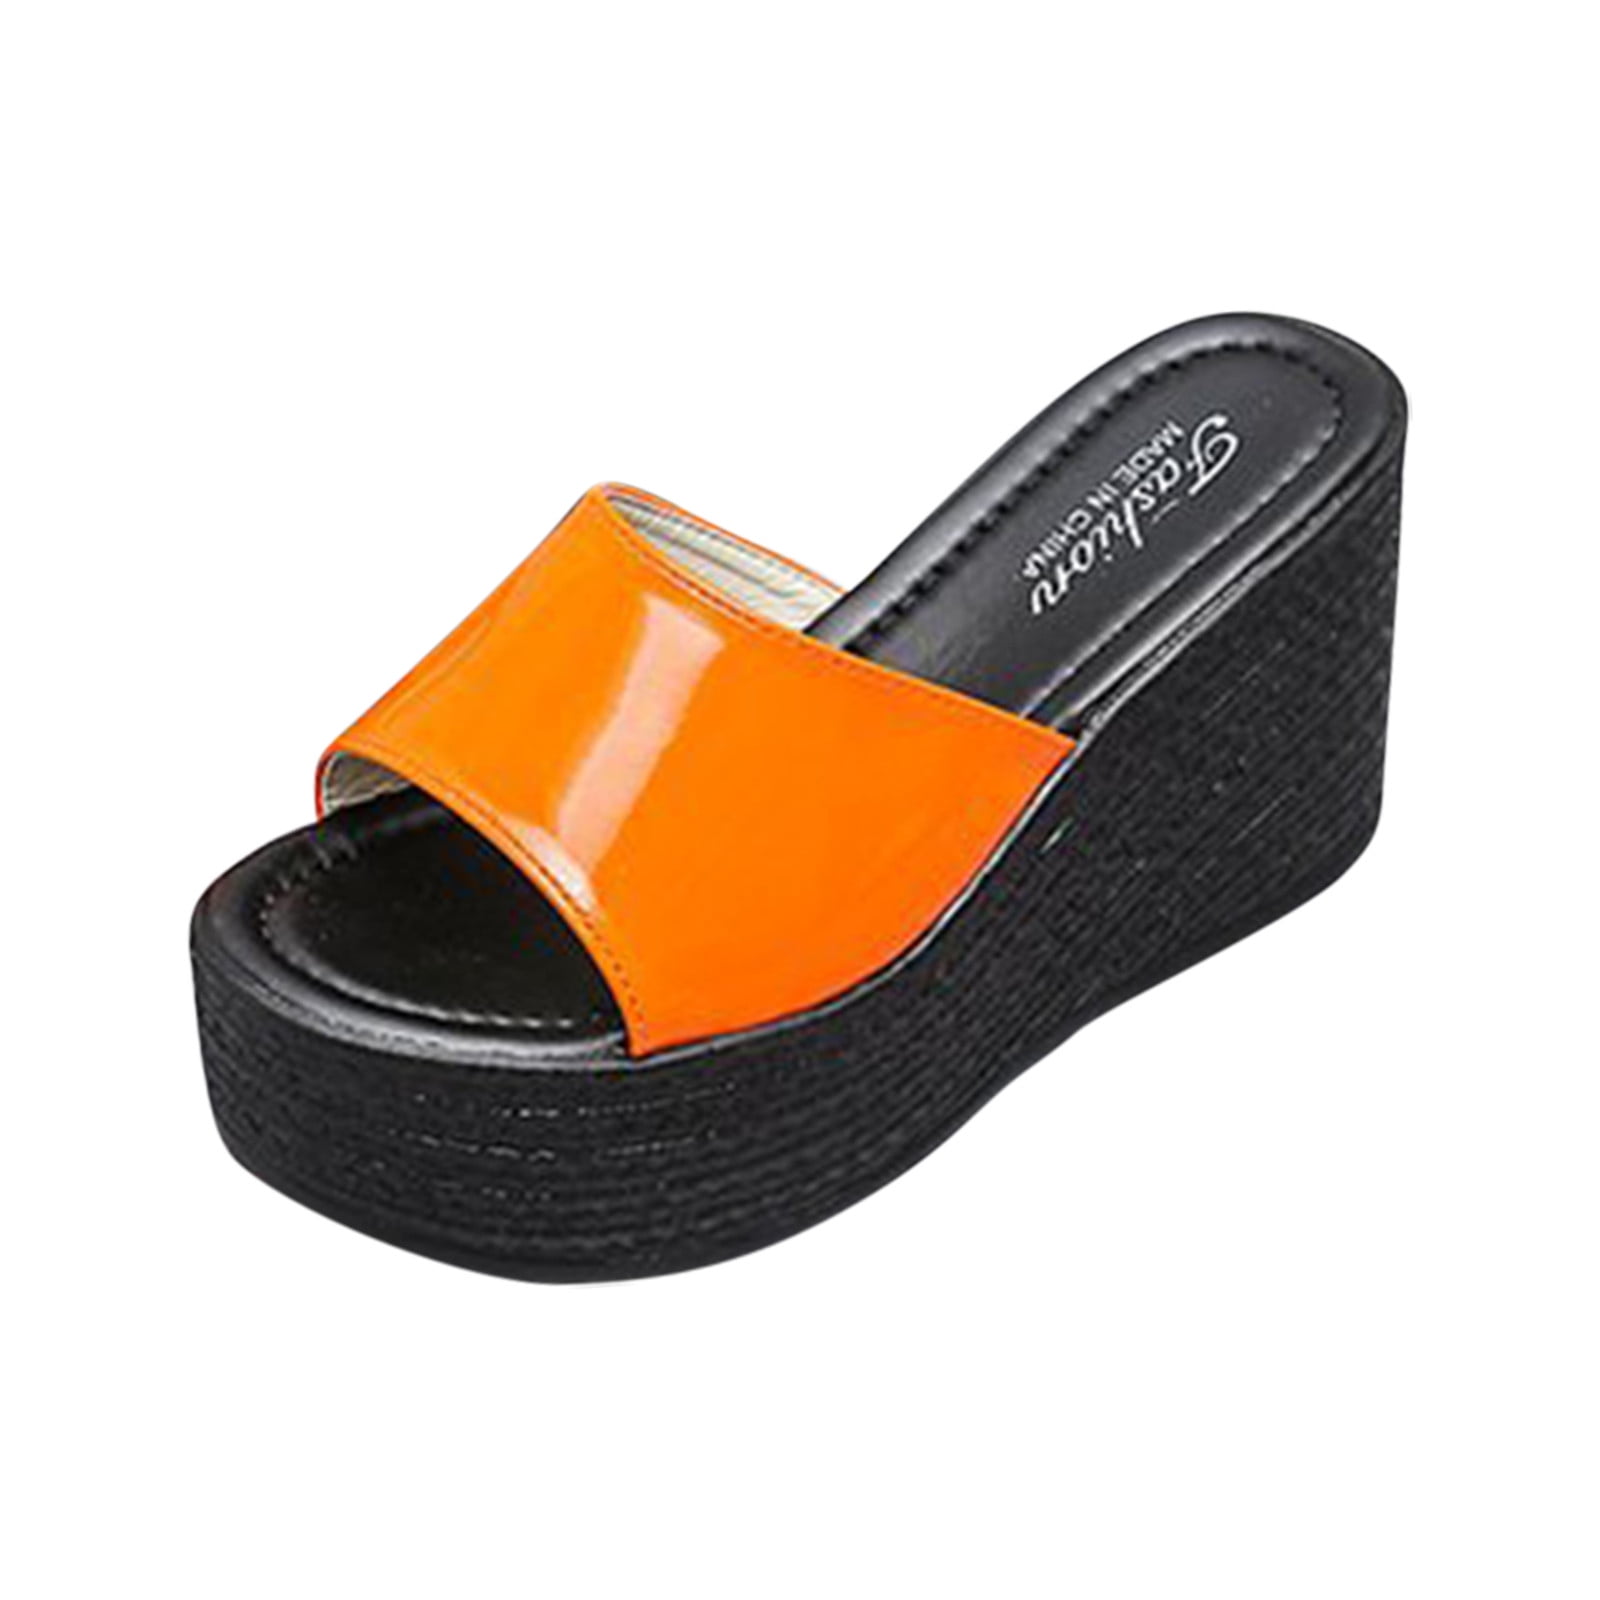 Kiplyki Wholesale Women's Ladies Platform Wedges Heel Sandals